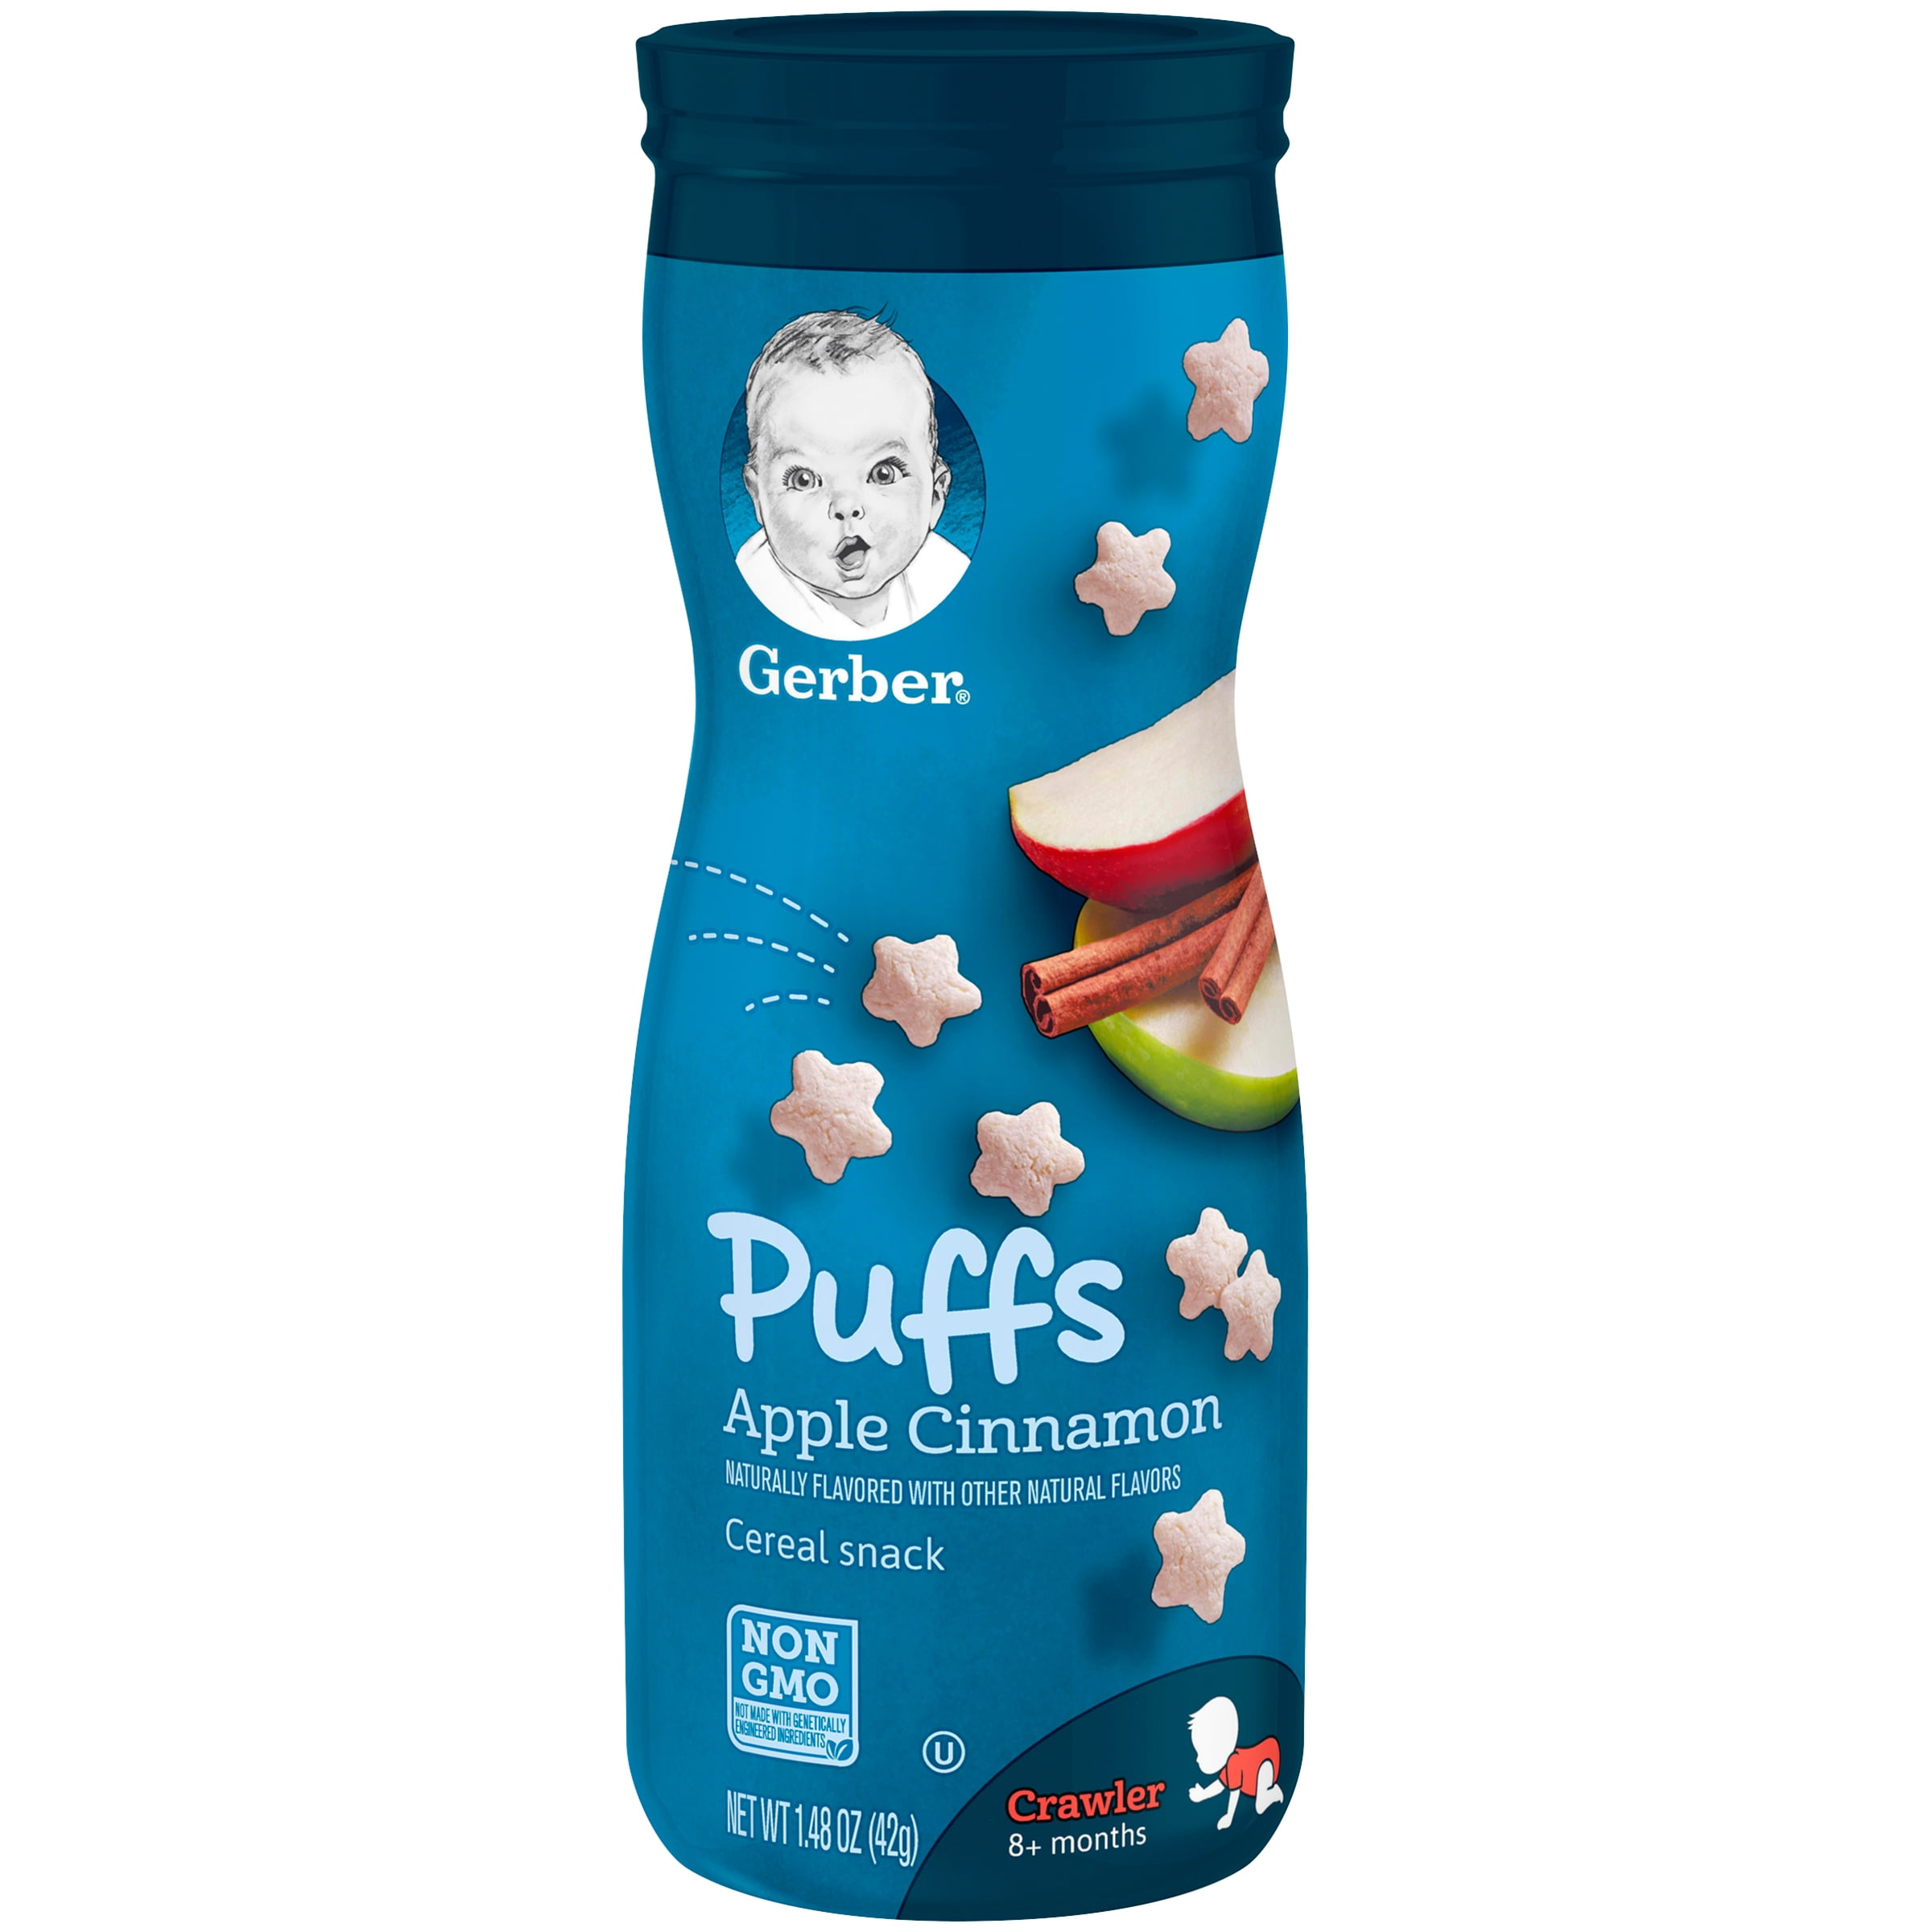 Gerber Puffs Apple Cinnamon, 1.48 oz. Canister